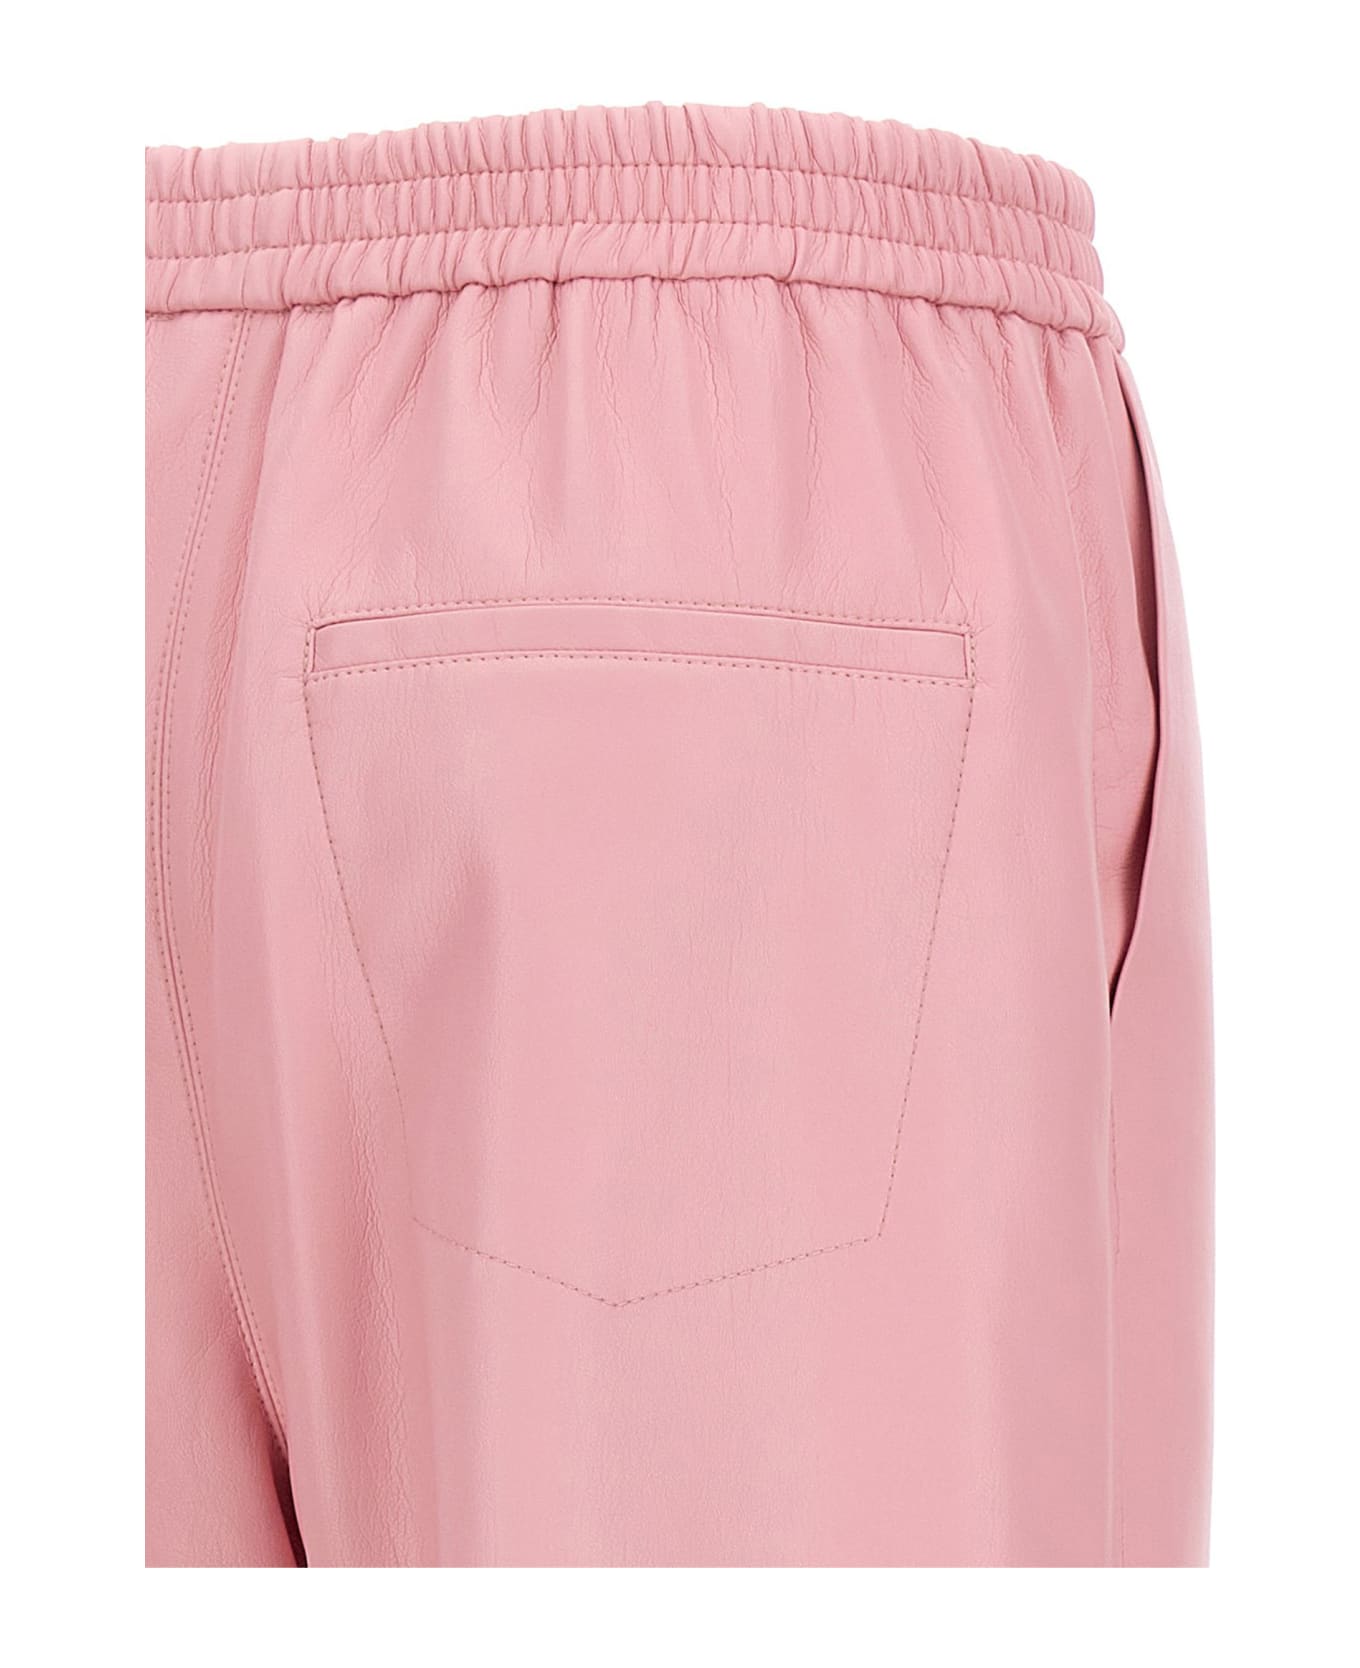 Nanushka Lorca' Pants - Pink